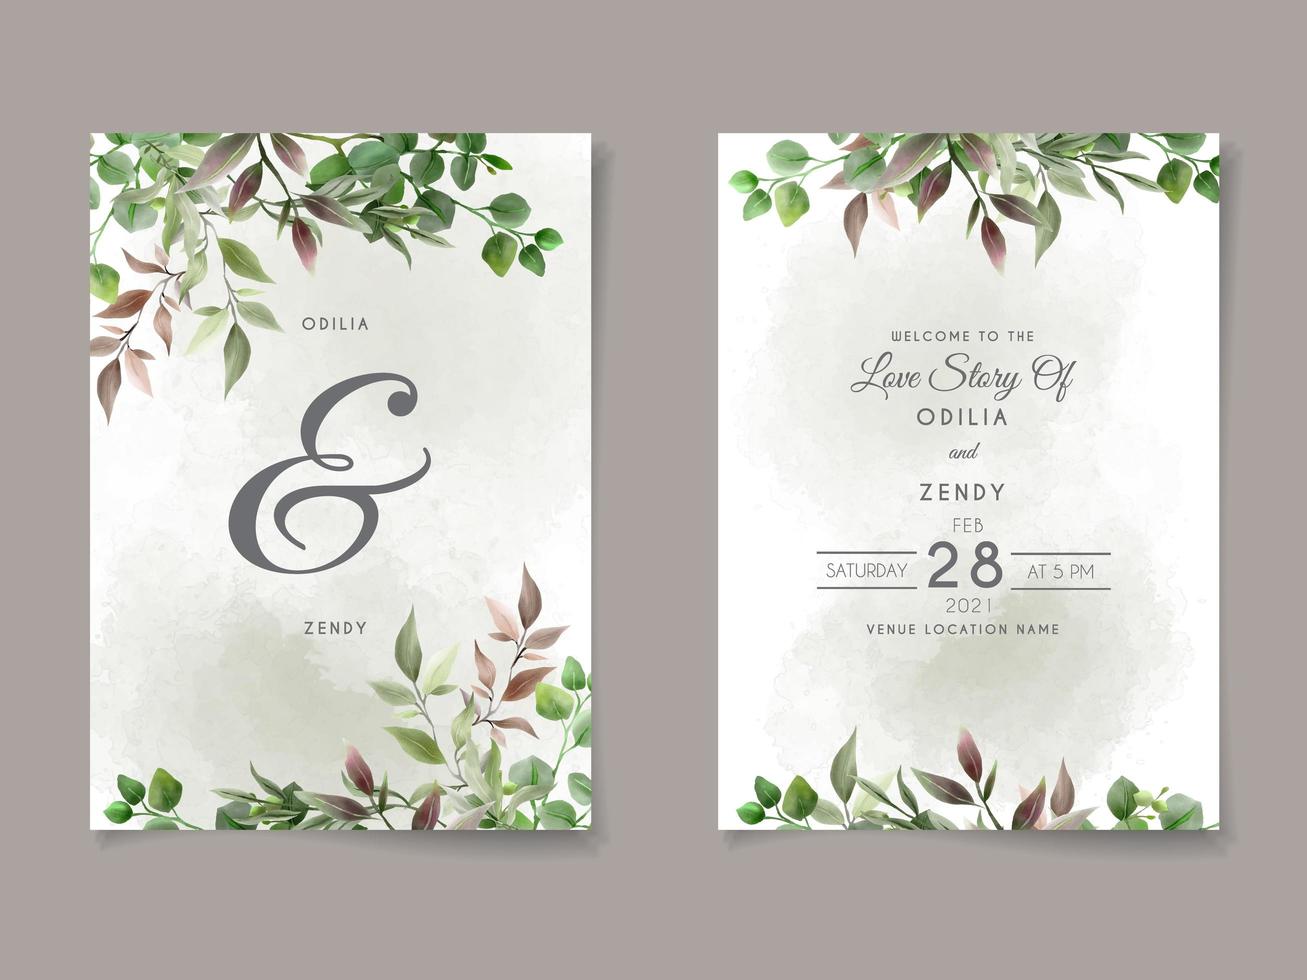 Beautiful floral wedding invitation card template vector